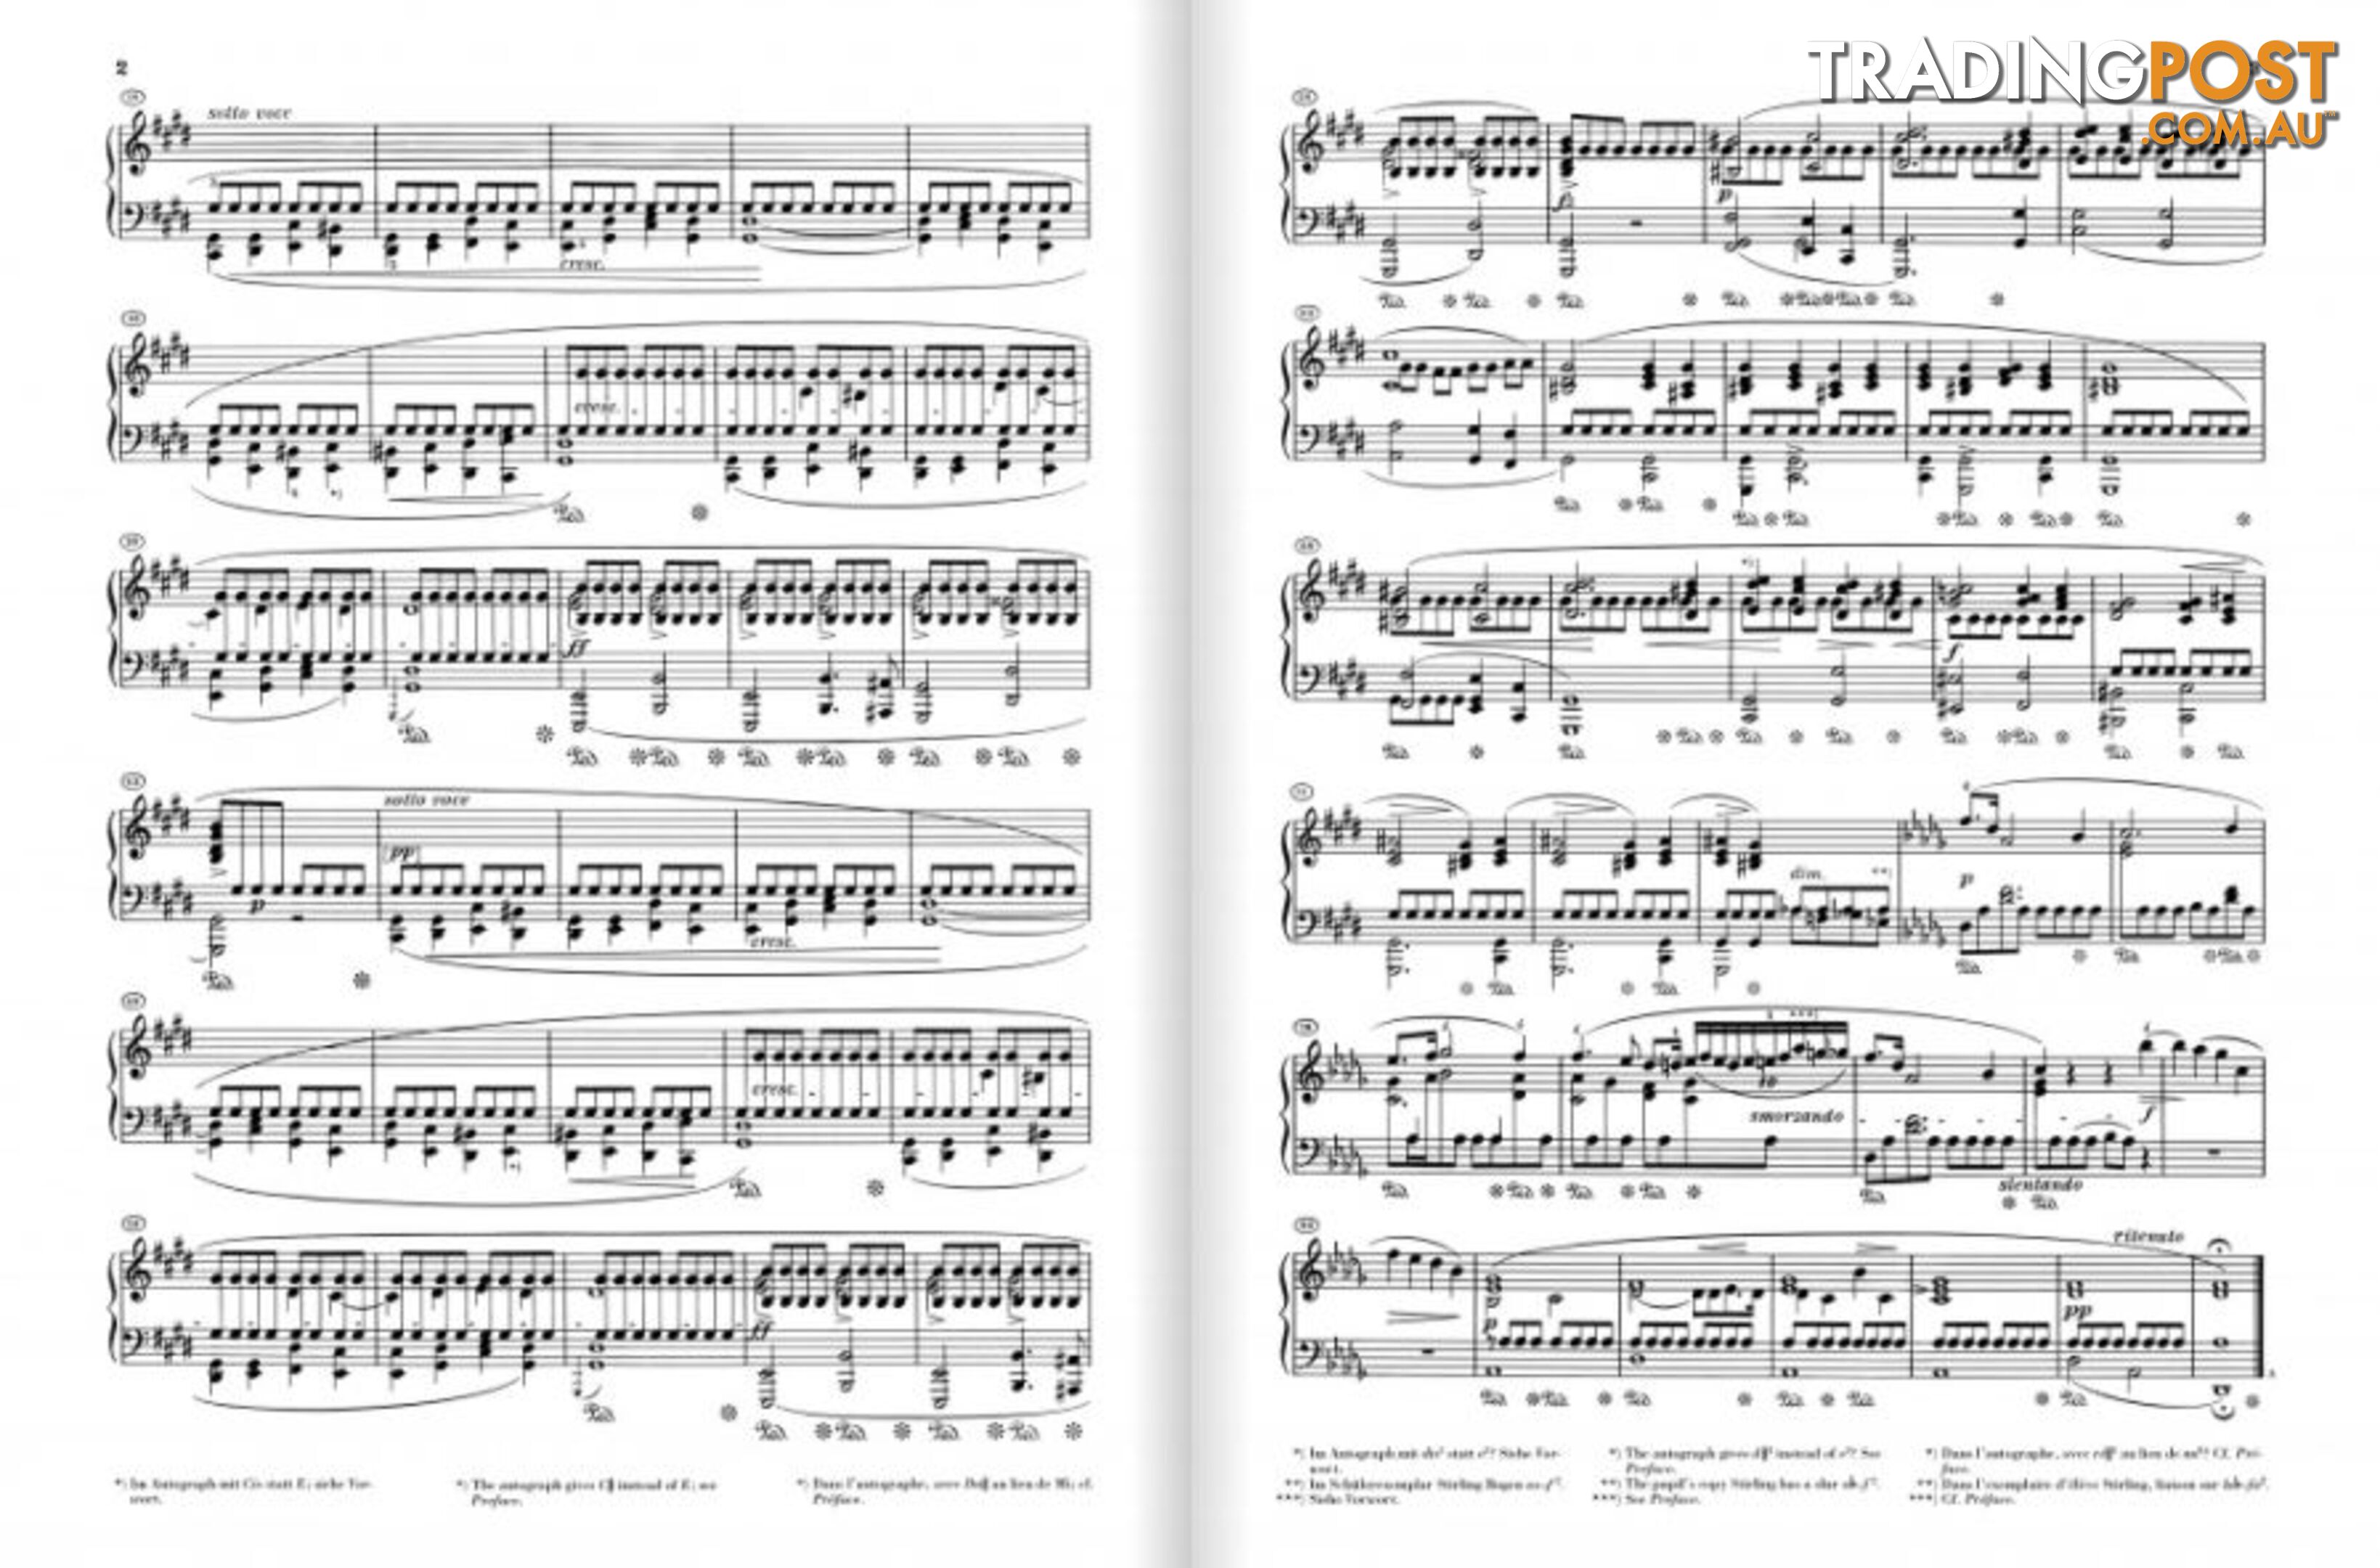 Chopin - Prelude D flat major op. 28 no. 15 (Raindrop) HN854